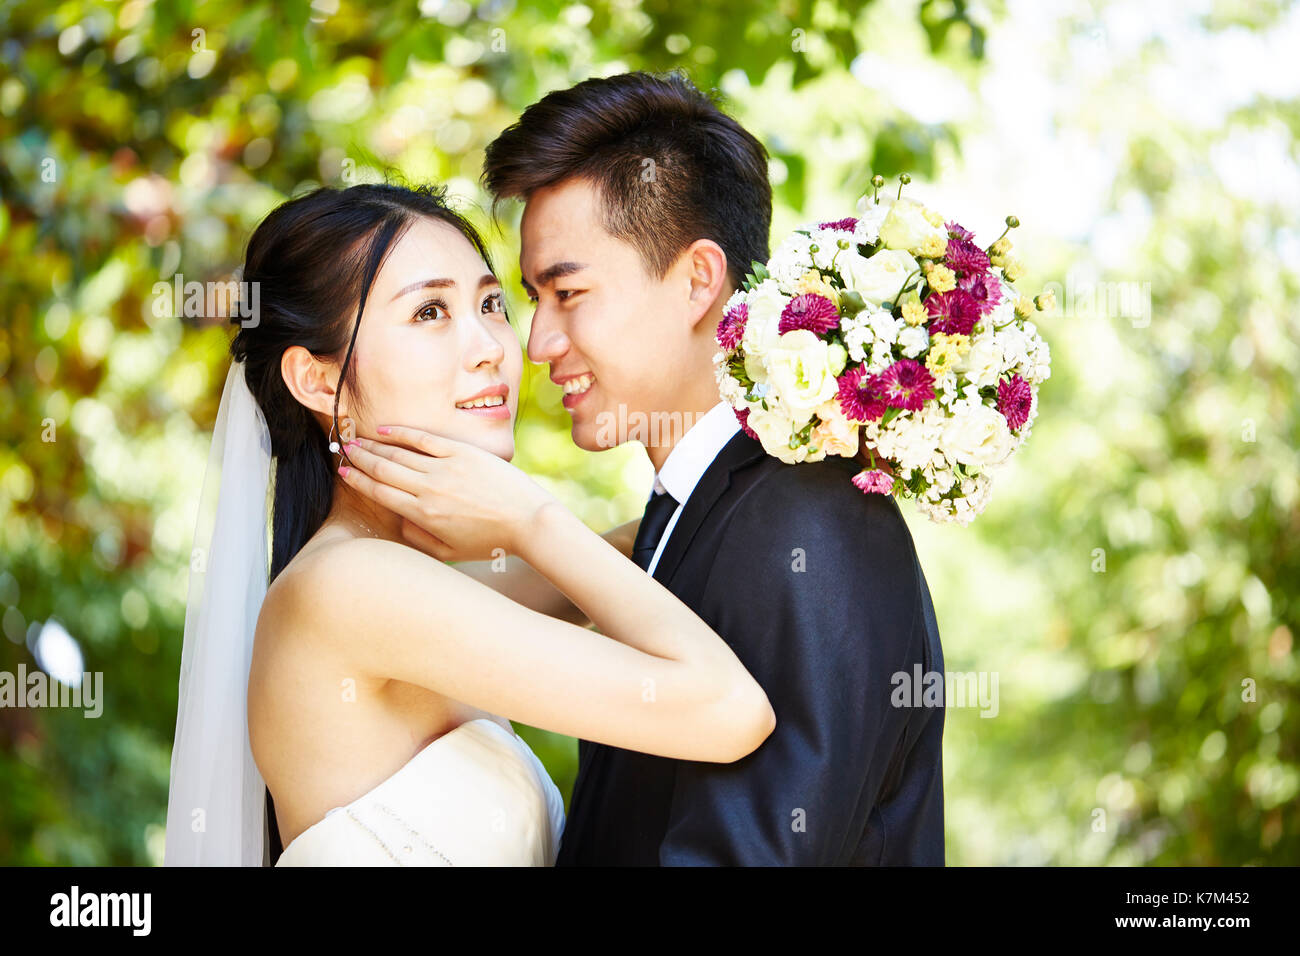 close-up portrait of loving wedding couple. Stock Photo